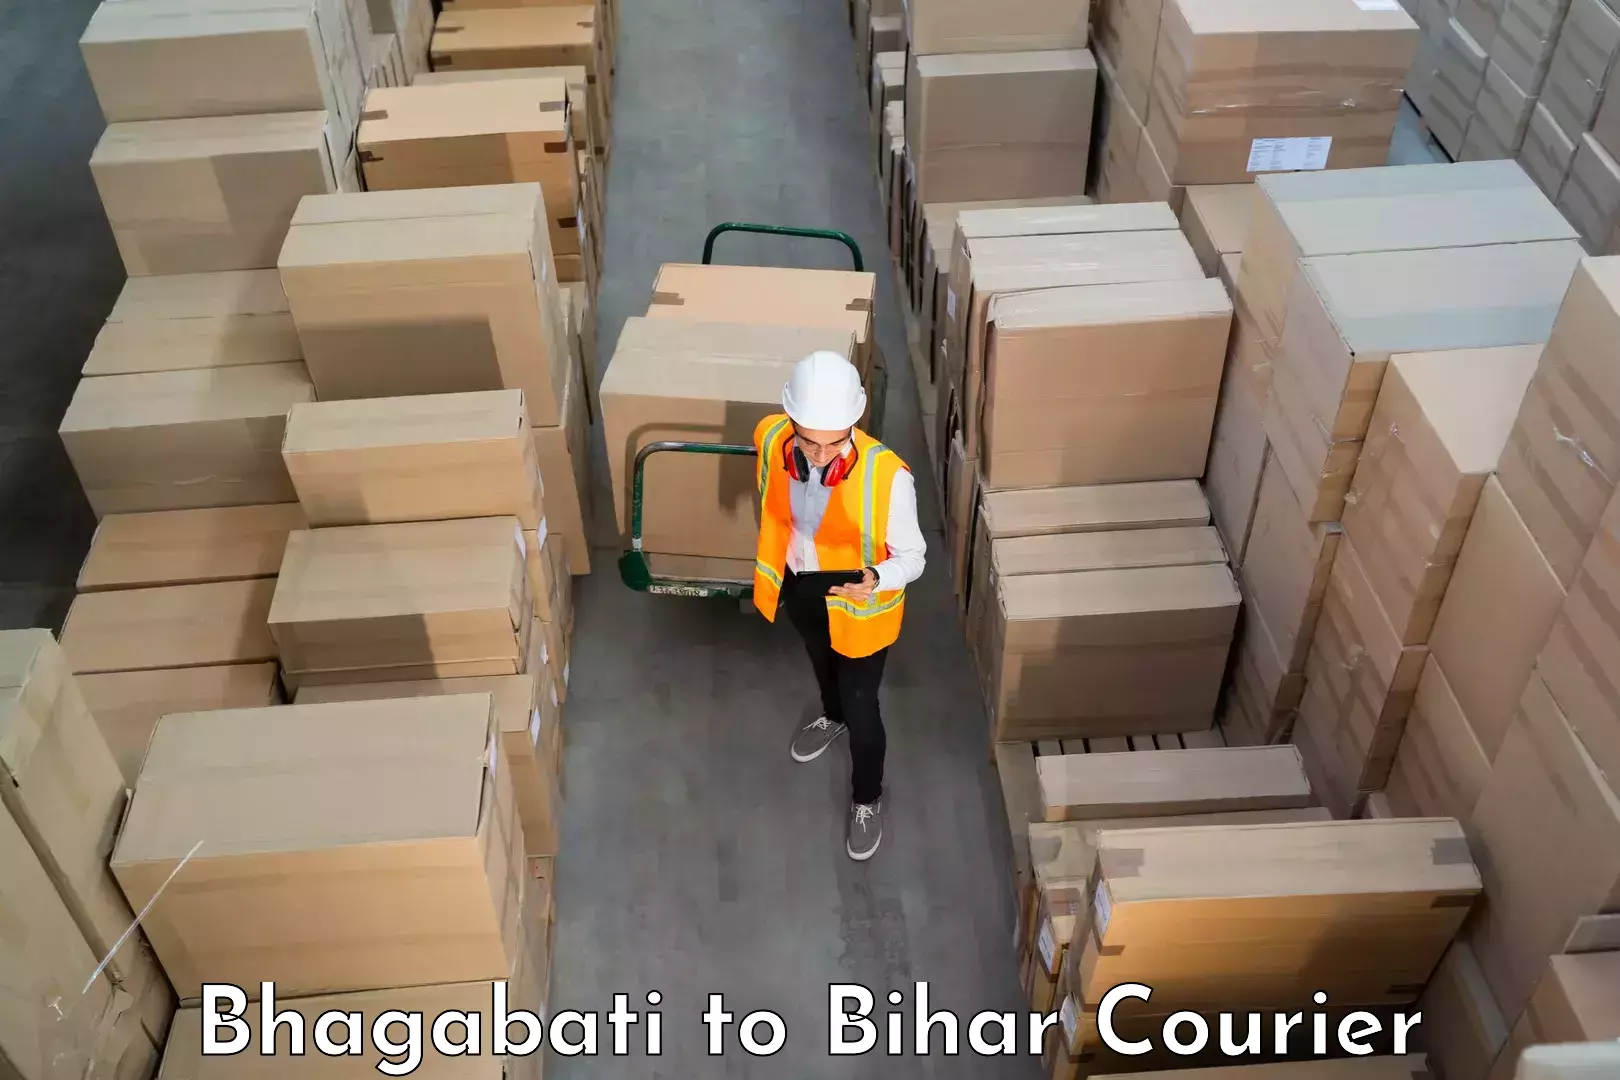 Furniture moving experts Bhagabati to Bihar